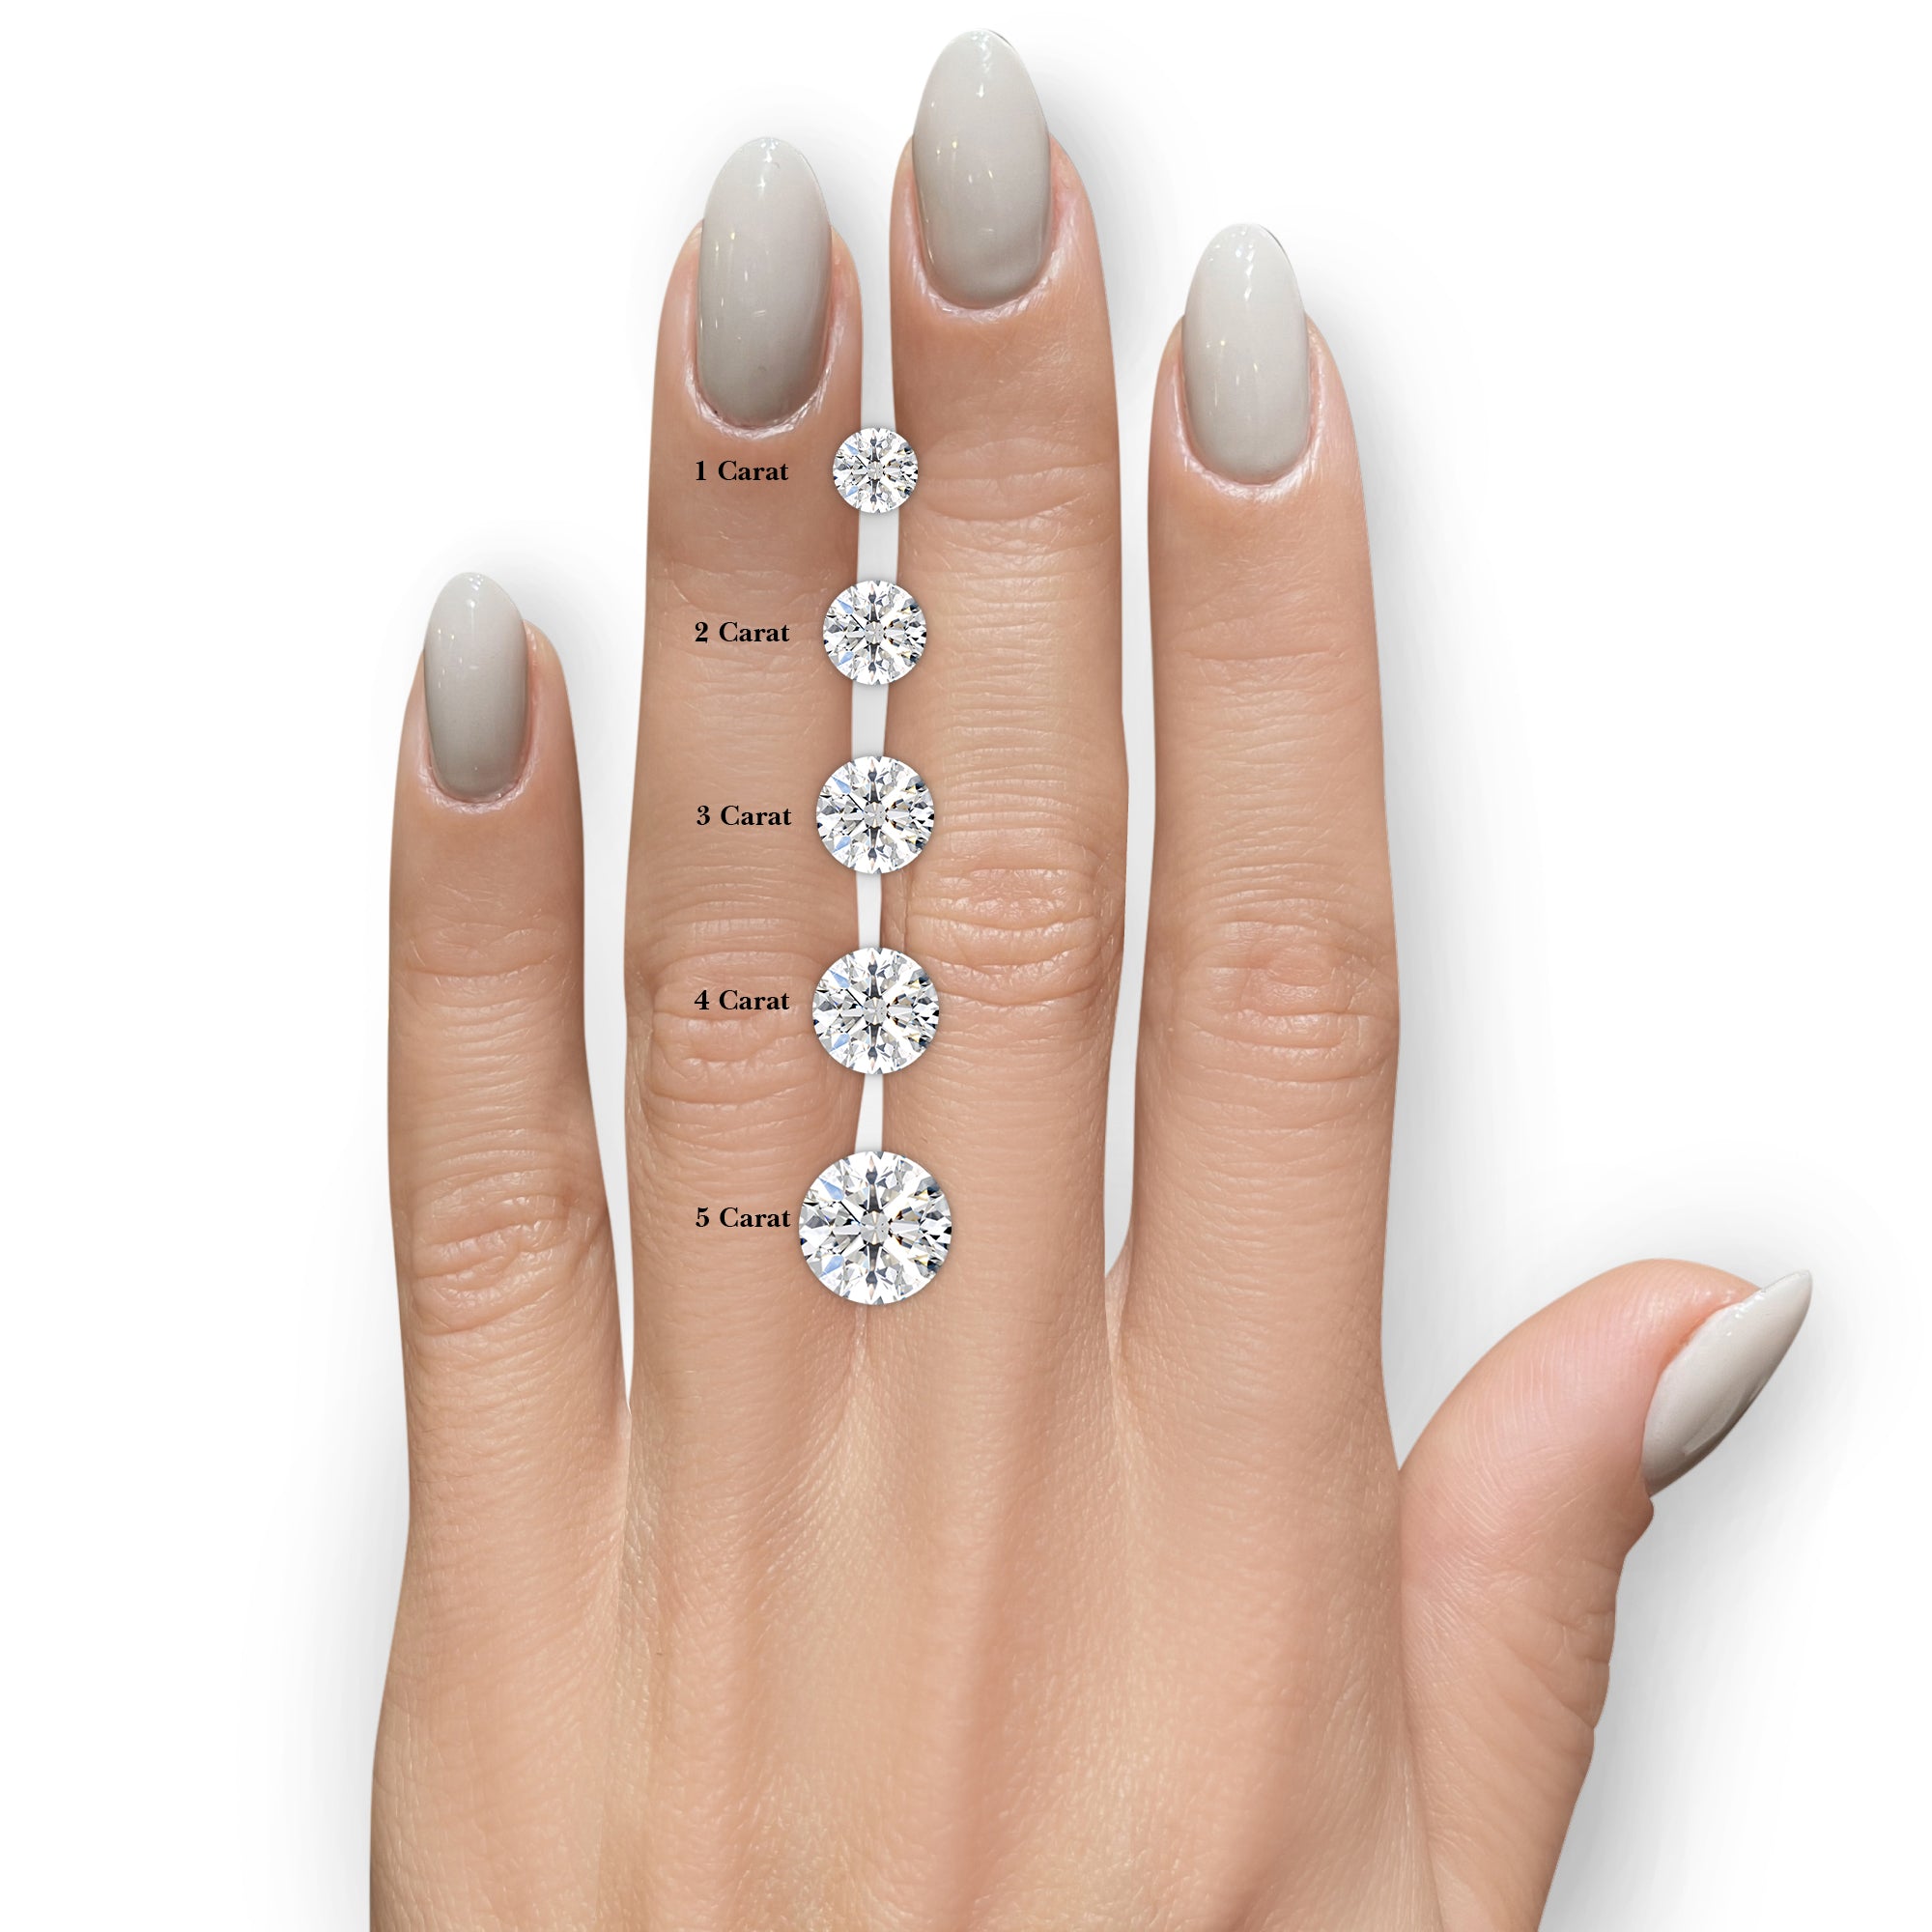 Lily Diamond Engagement Ring -18K White Gold